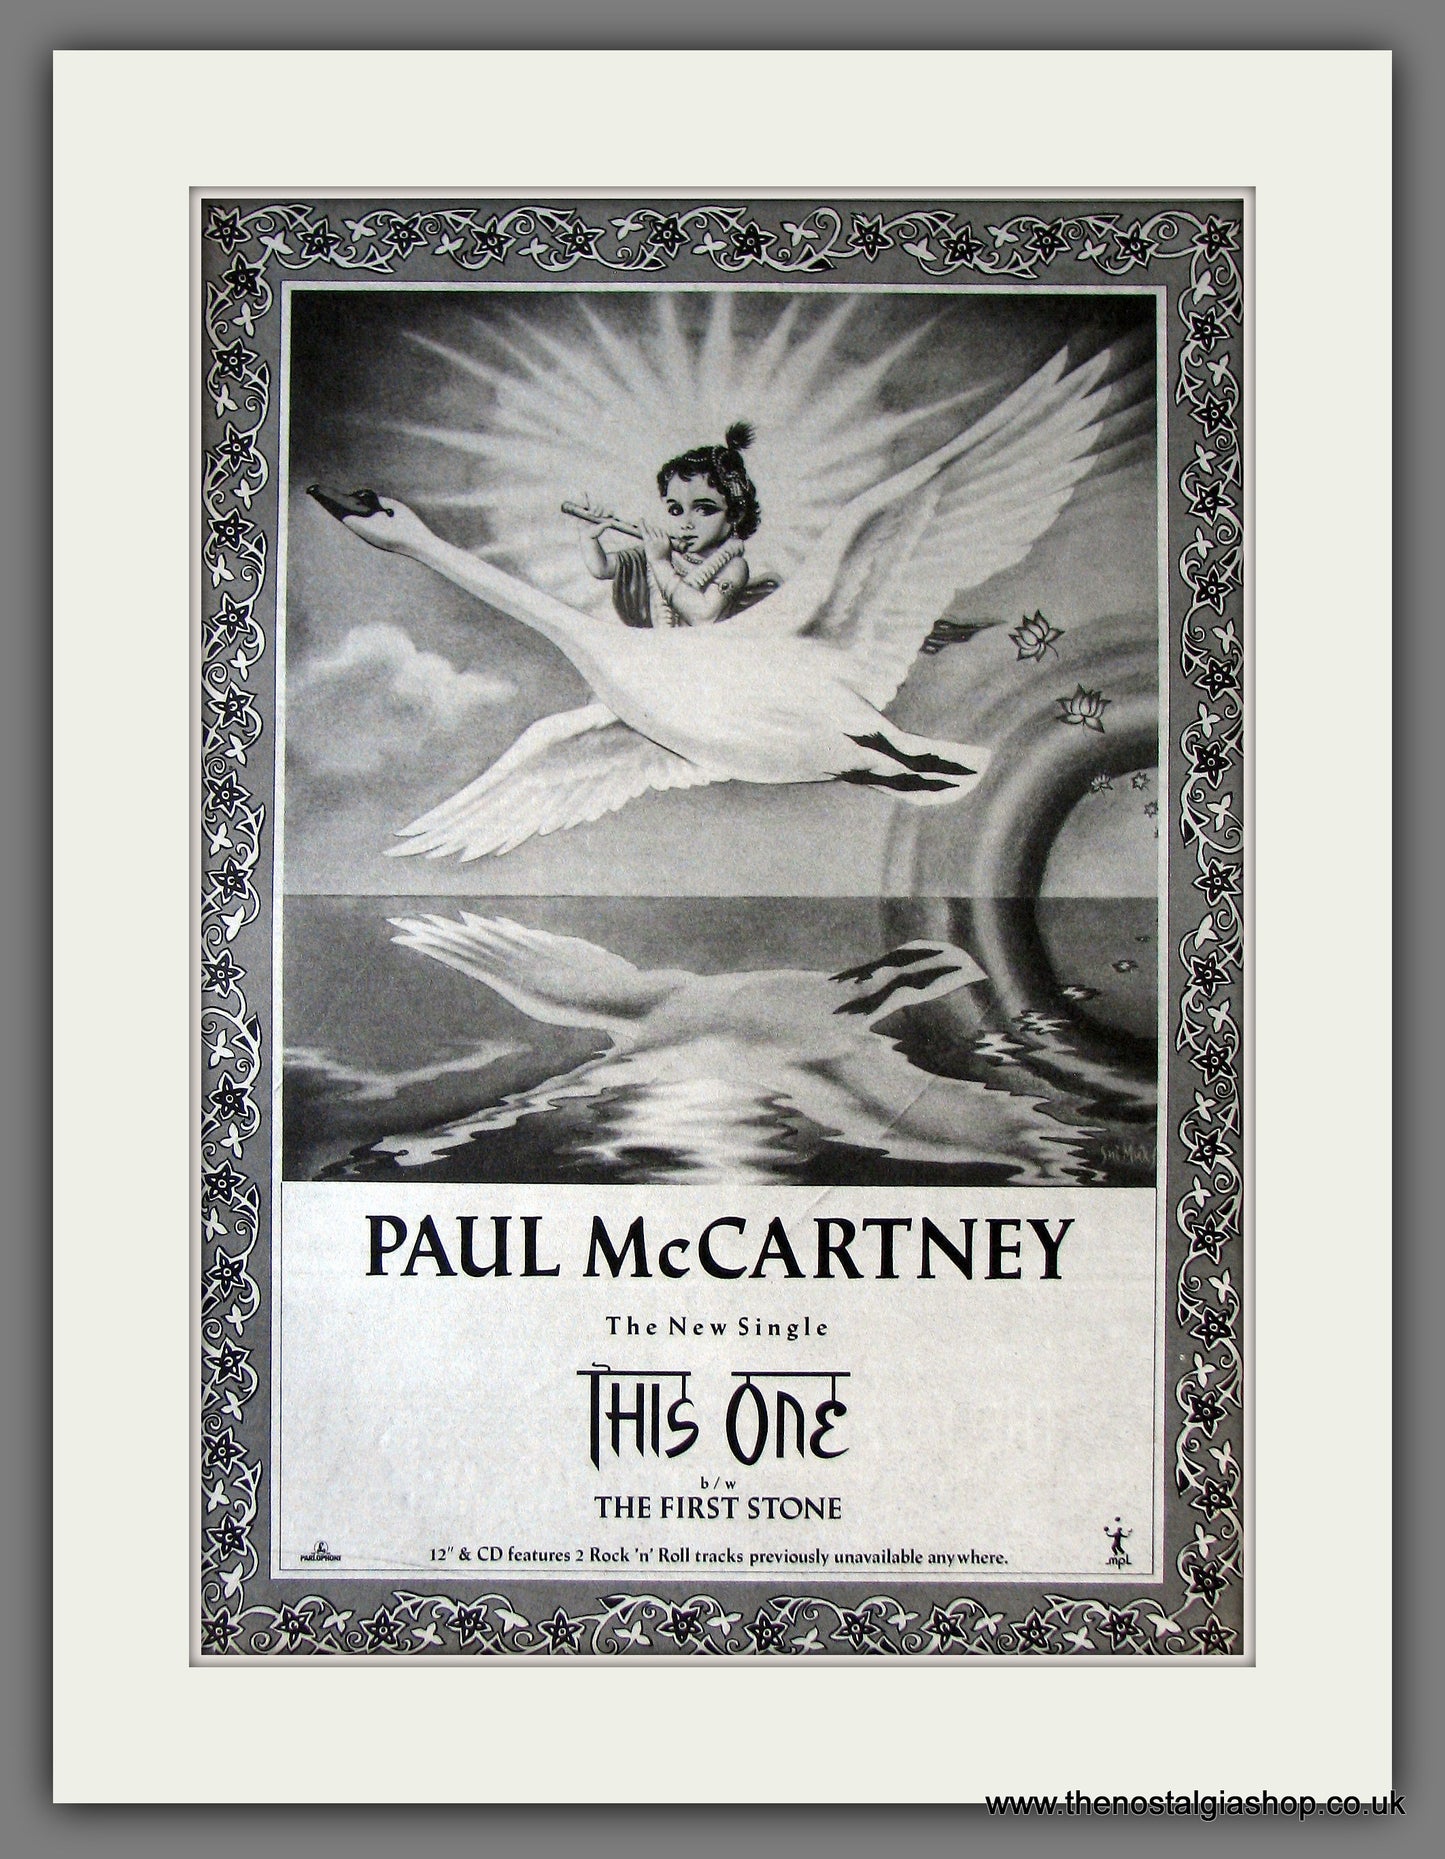 Paul McCartney. This One. Original Advert 1989 (ref AD13844)